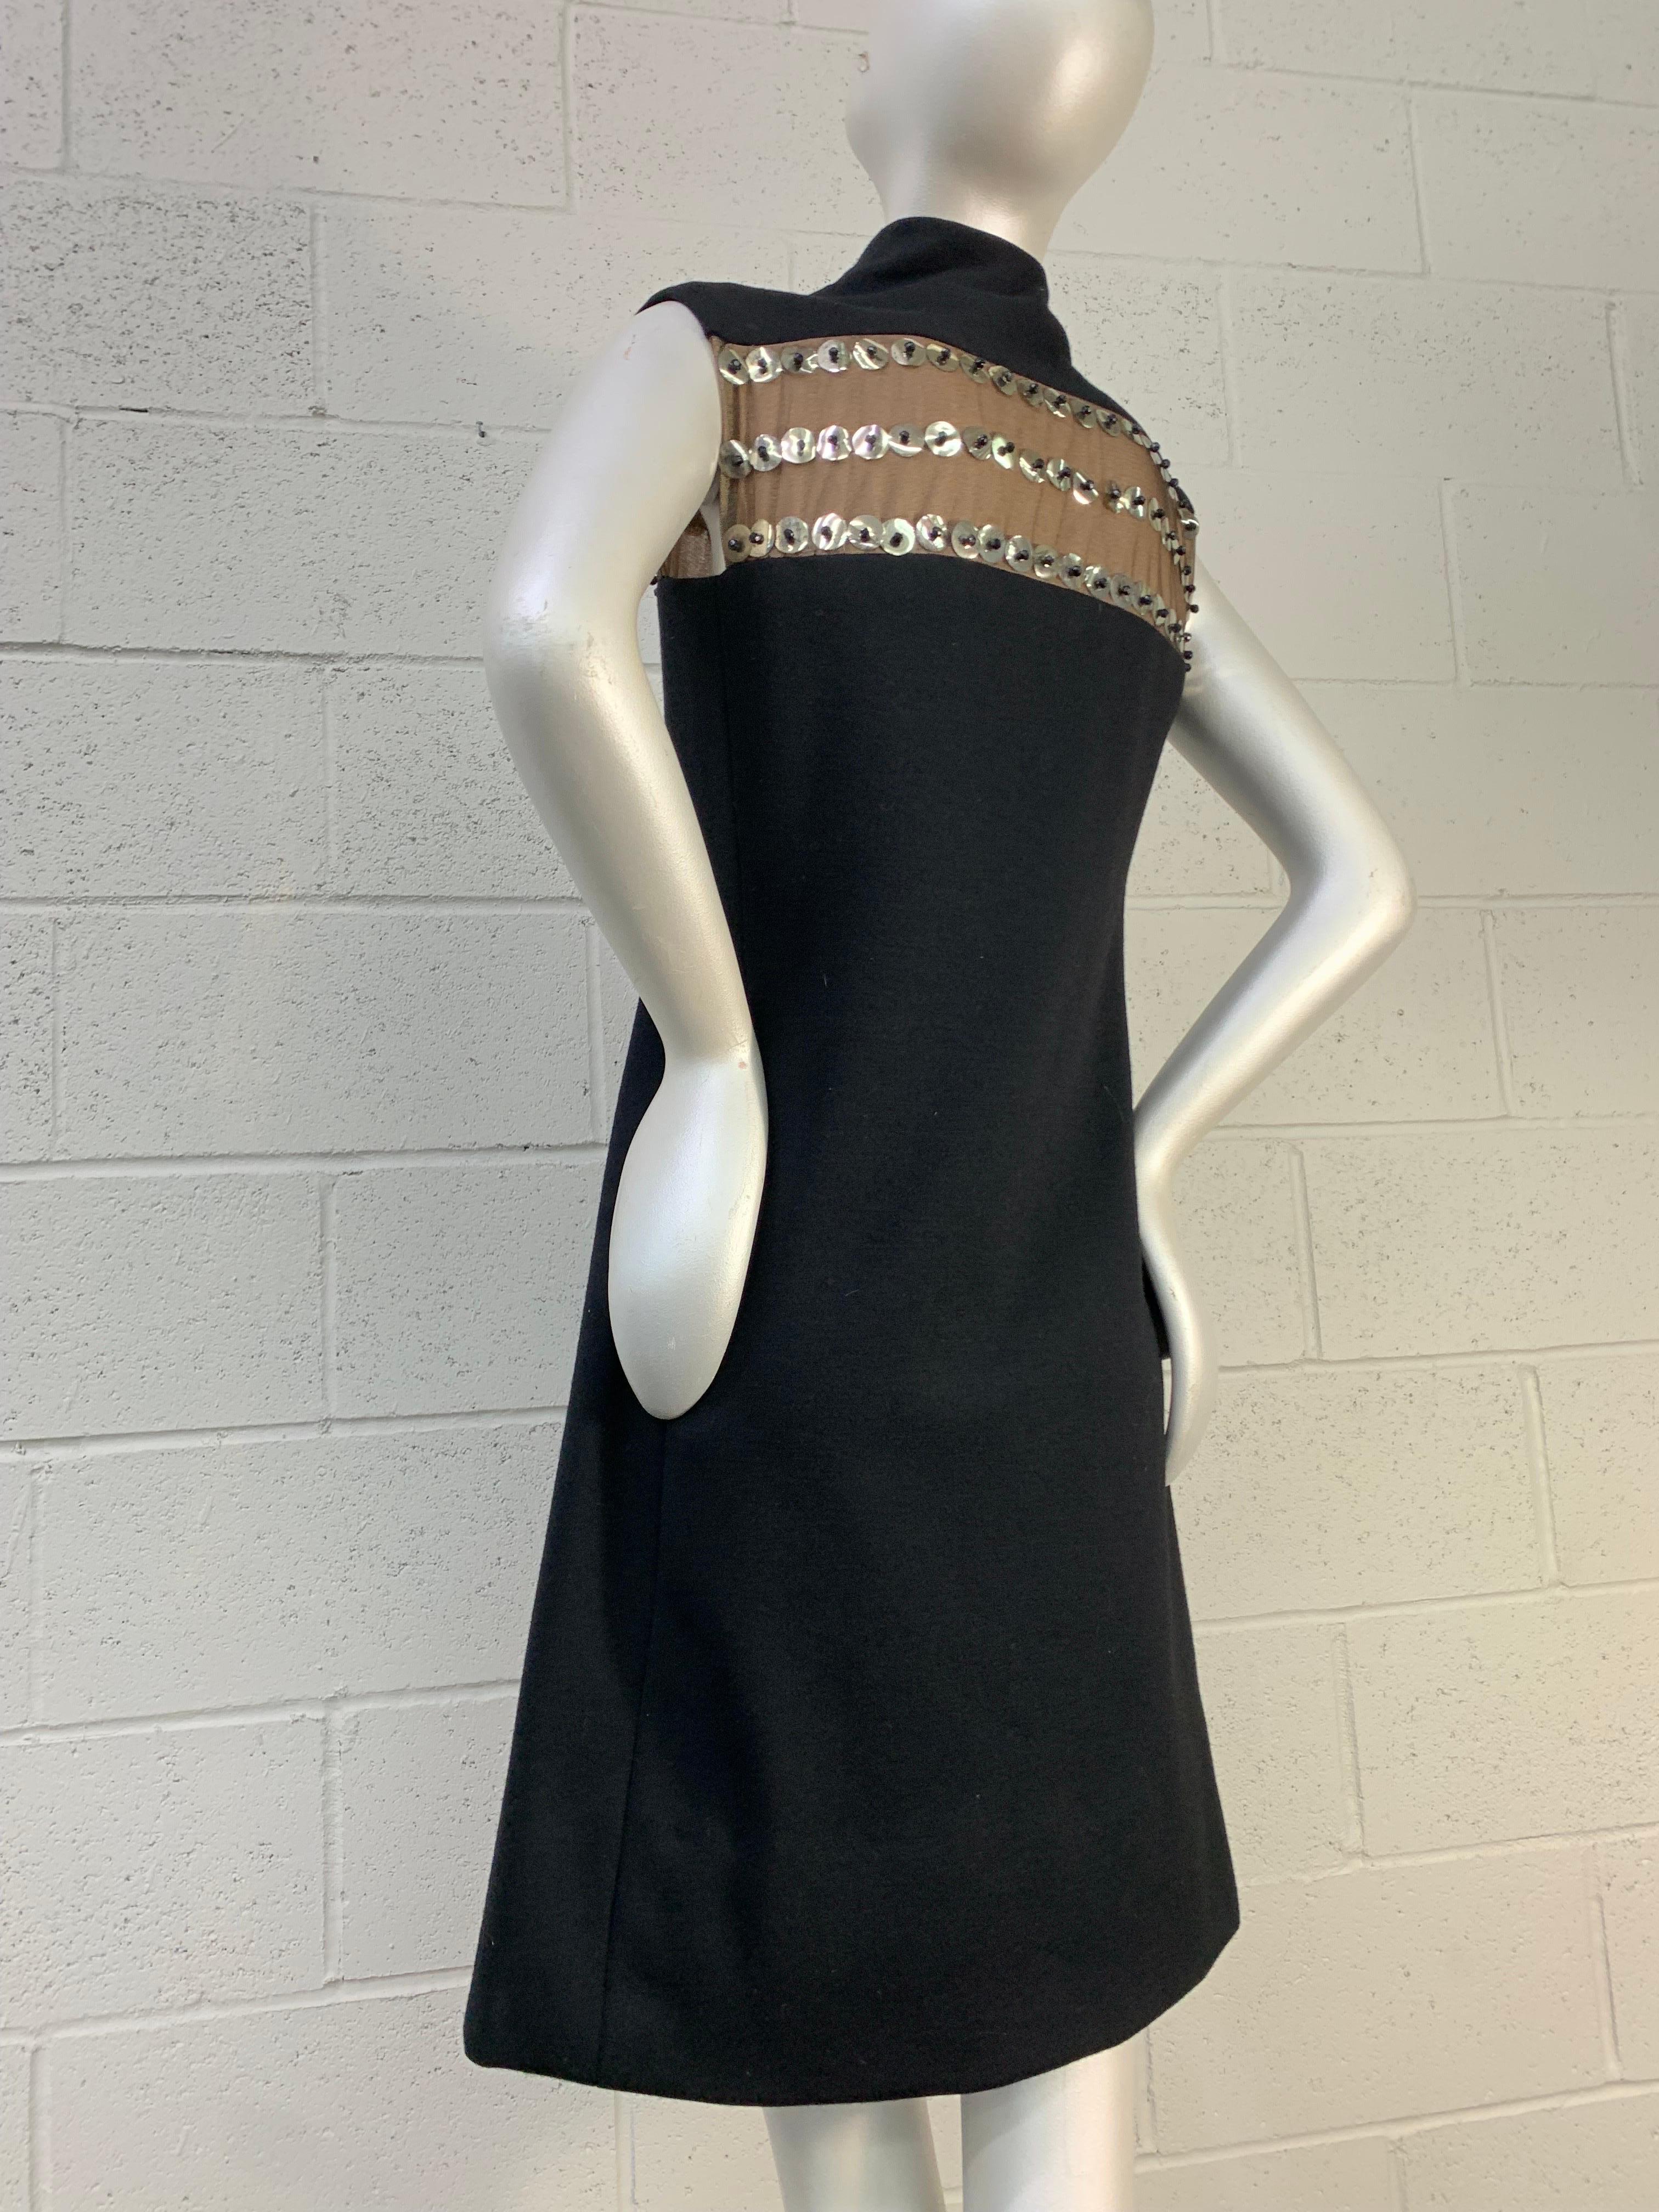 1960 Pauline Trigere Mod Black Wool A-Line Dress w Sheer Paillette Embellishment For Sale 5